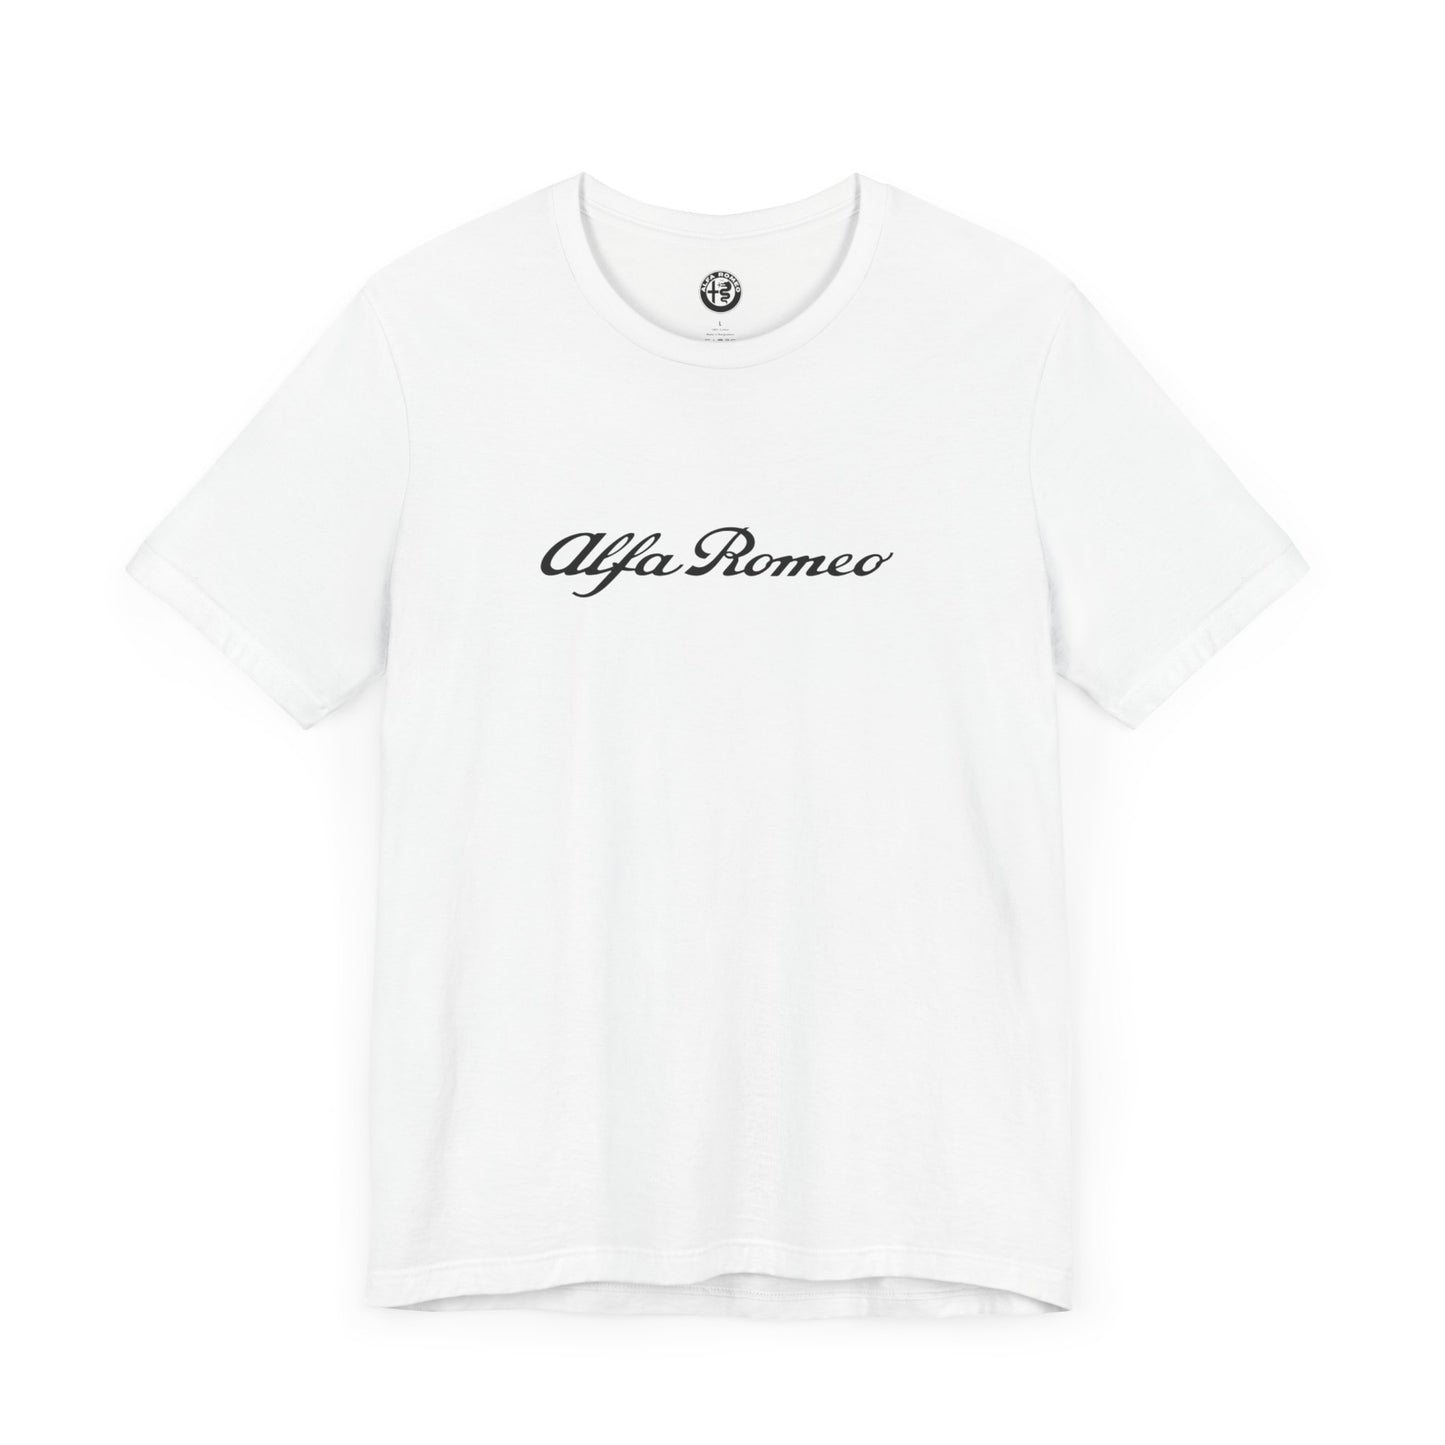 Alfa Romeo Bella+Canvas Camiseta de manga corta - Camiseta de algodón unisex ética - Made in USA